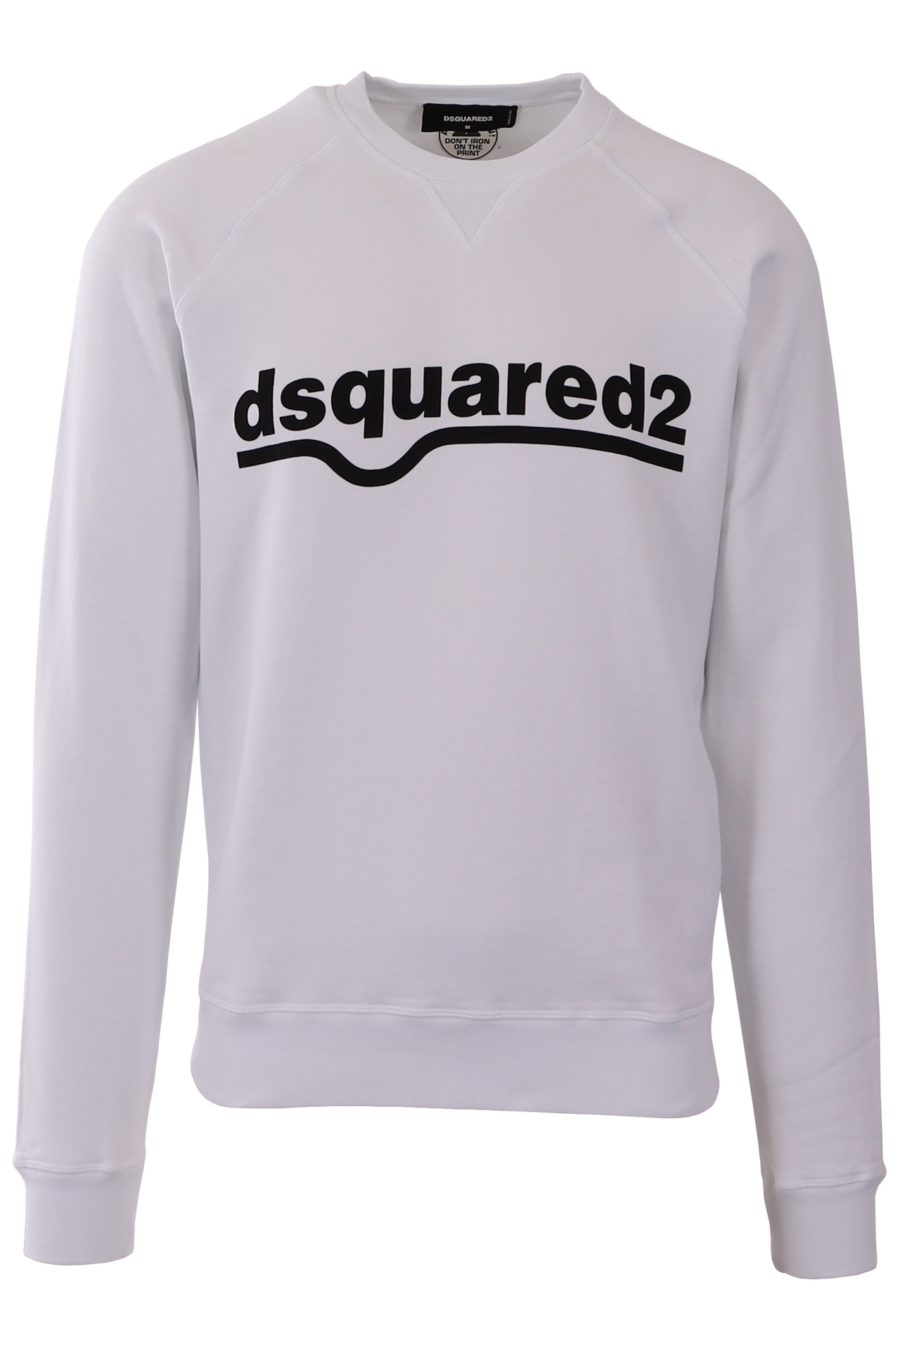 Sweatshirt Dsquared2 blanc avec logo noir - e5efea0d9278dc468a7c281fbe7b4fc18a7b0729